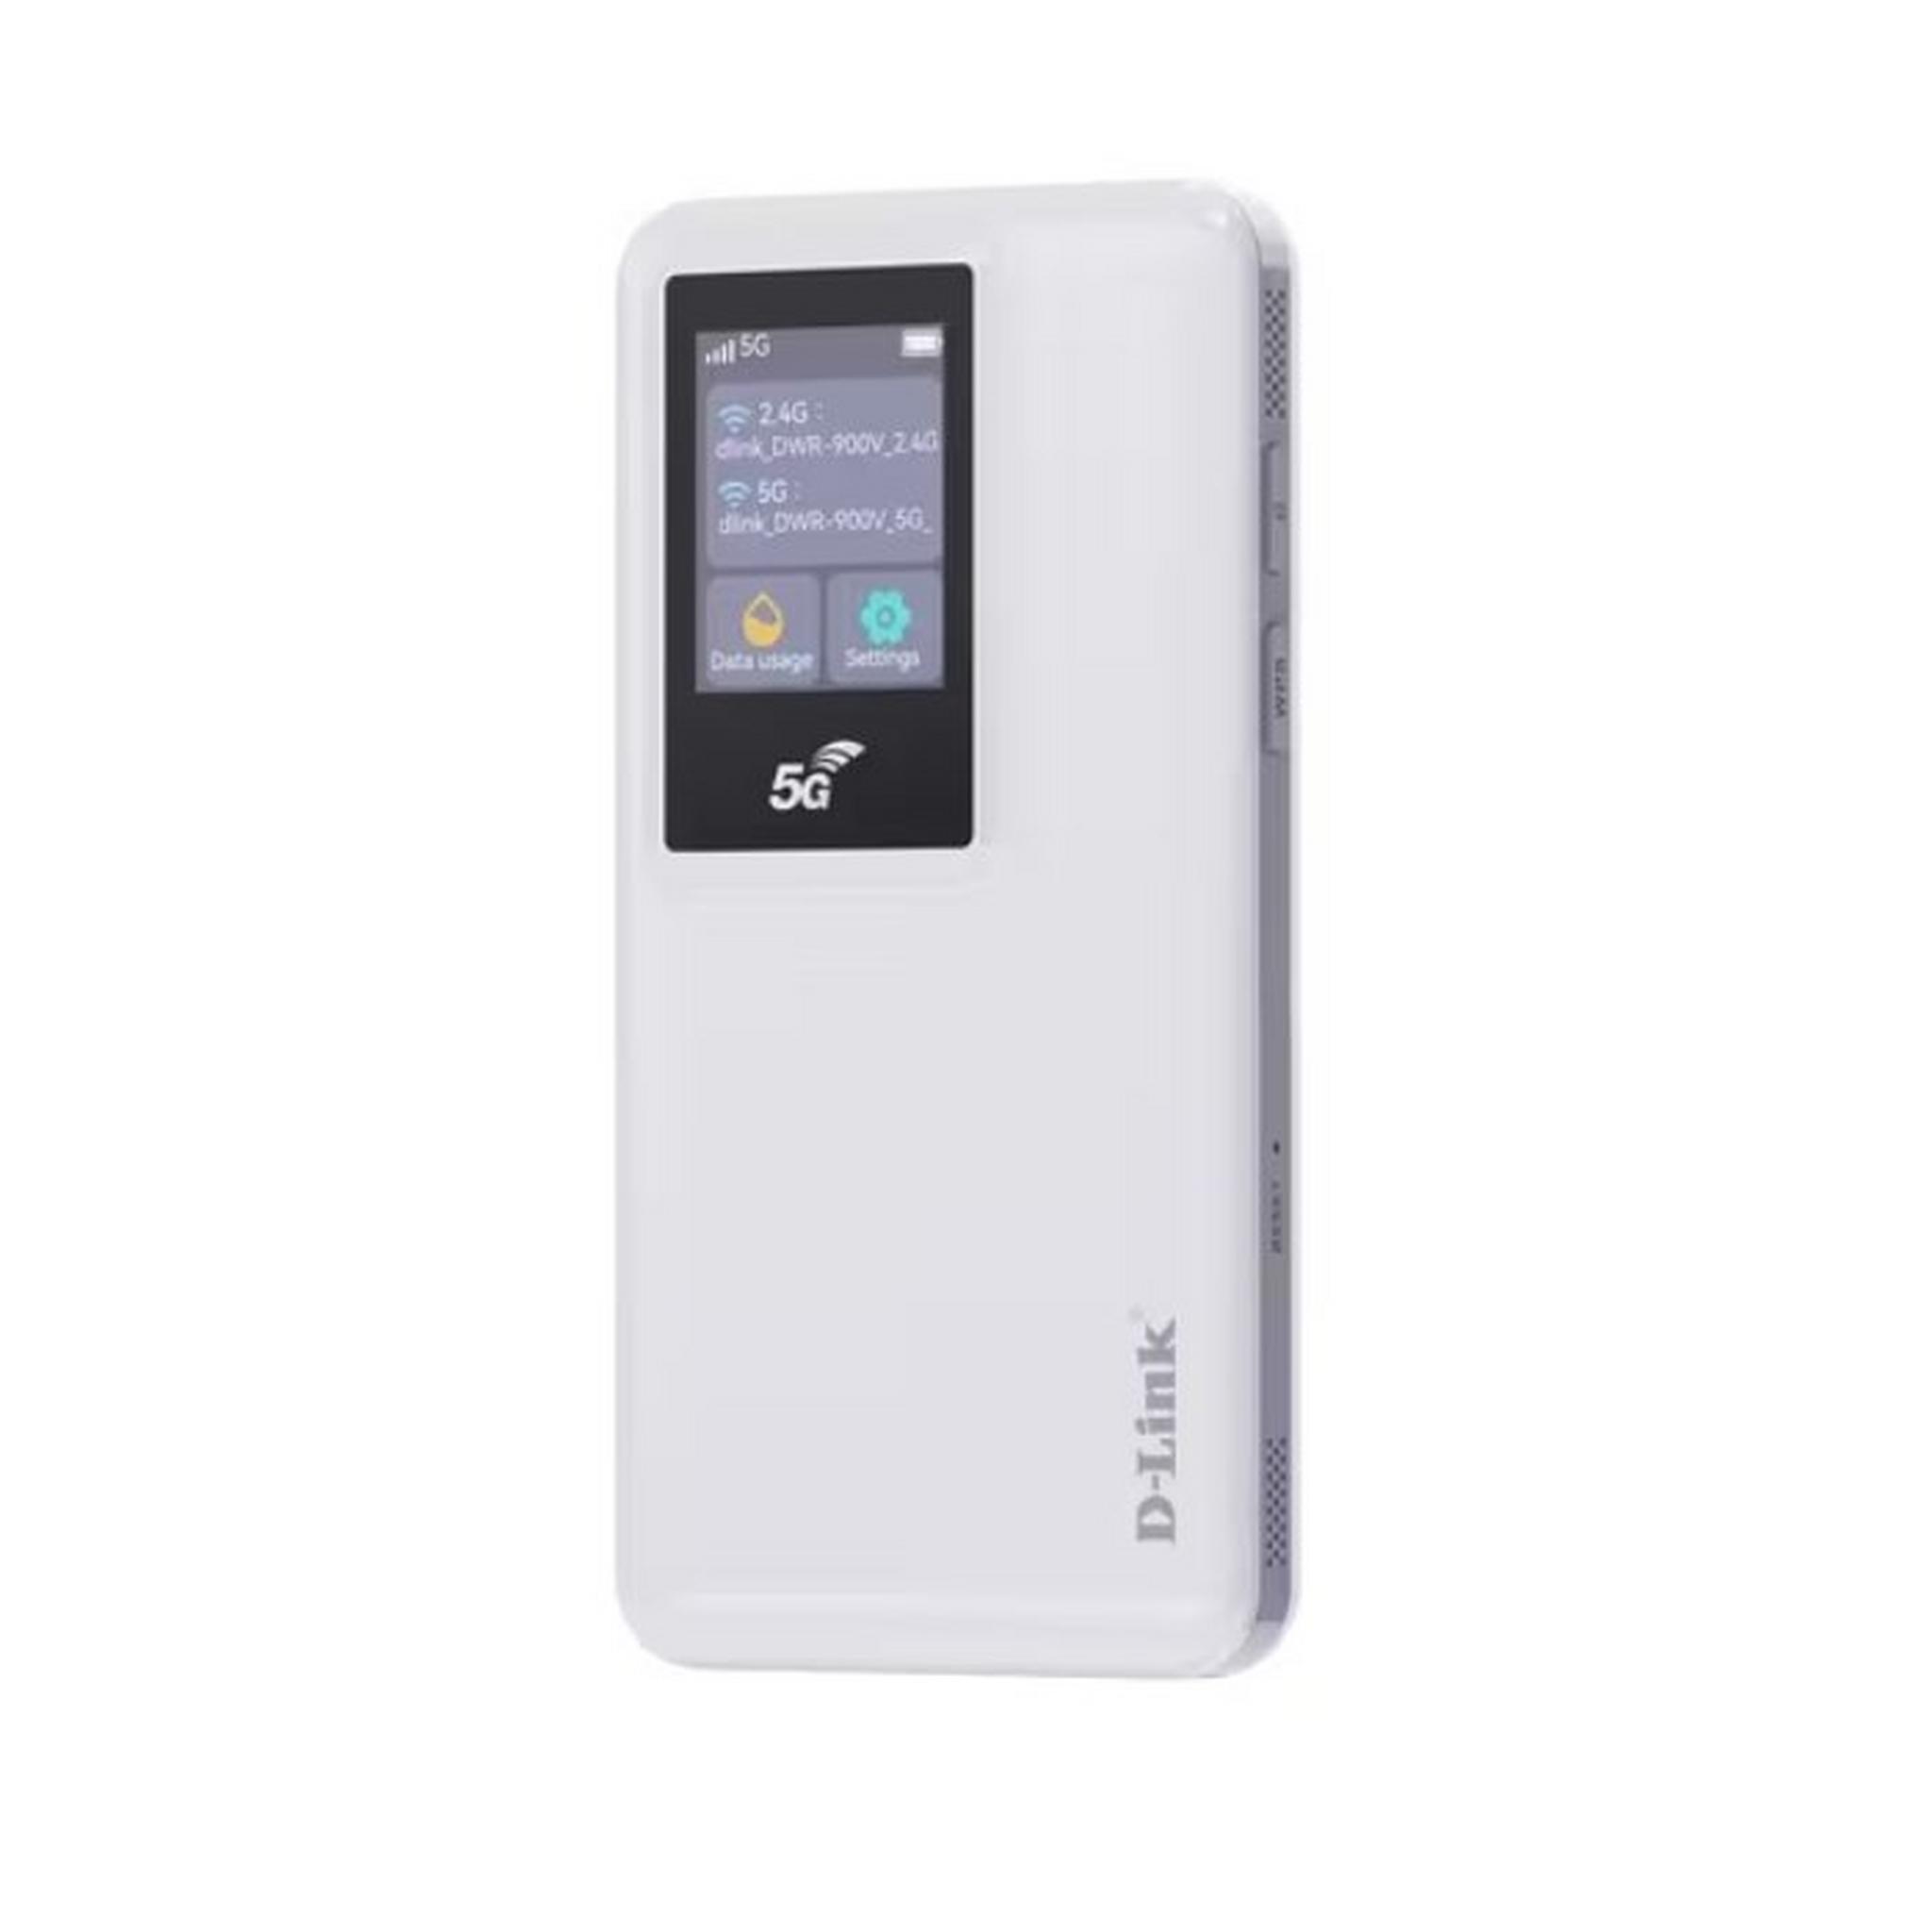 Dlink 5G LTE Mi-Fi Router, DWR-900V – White